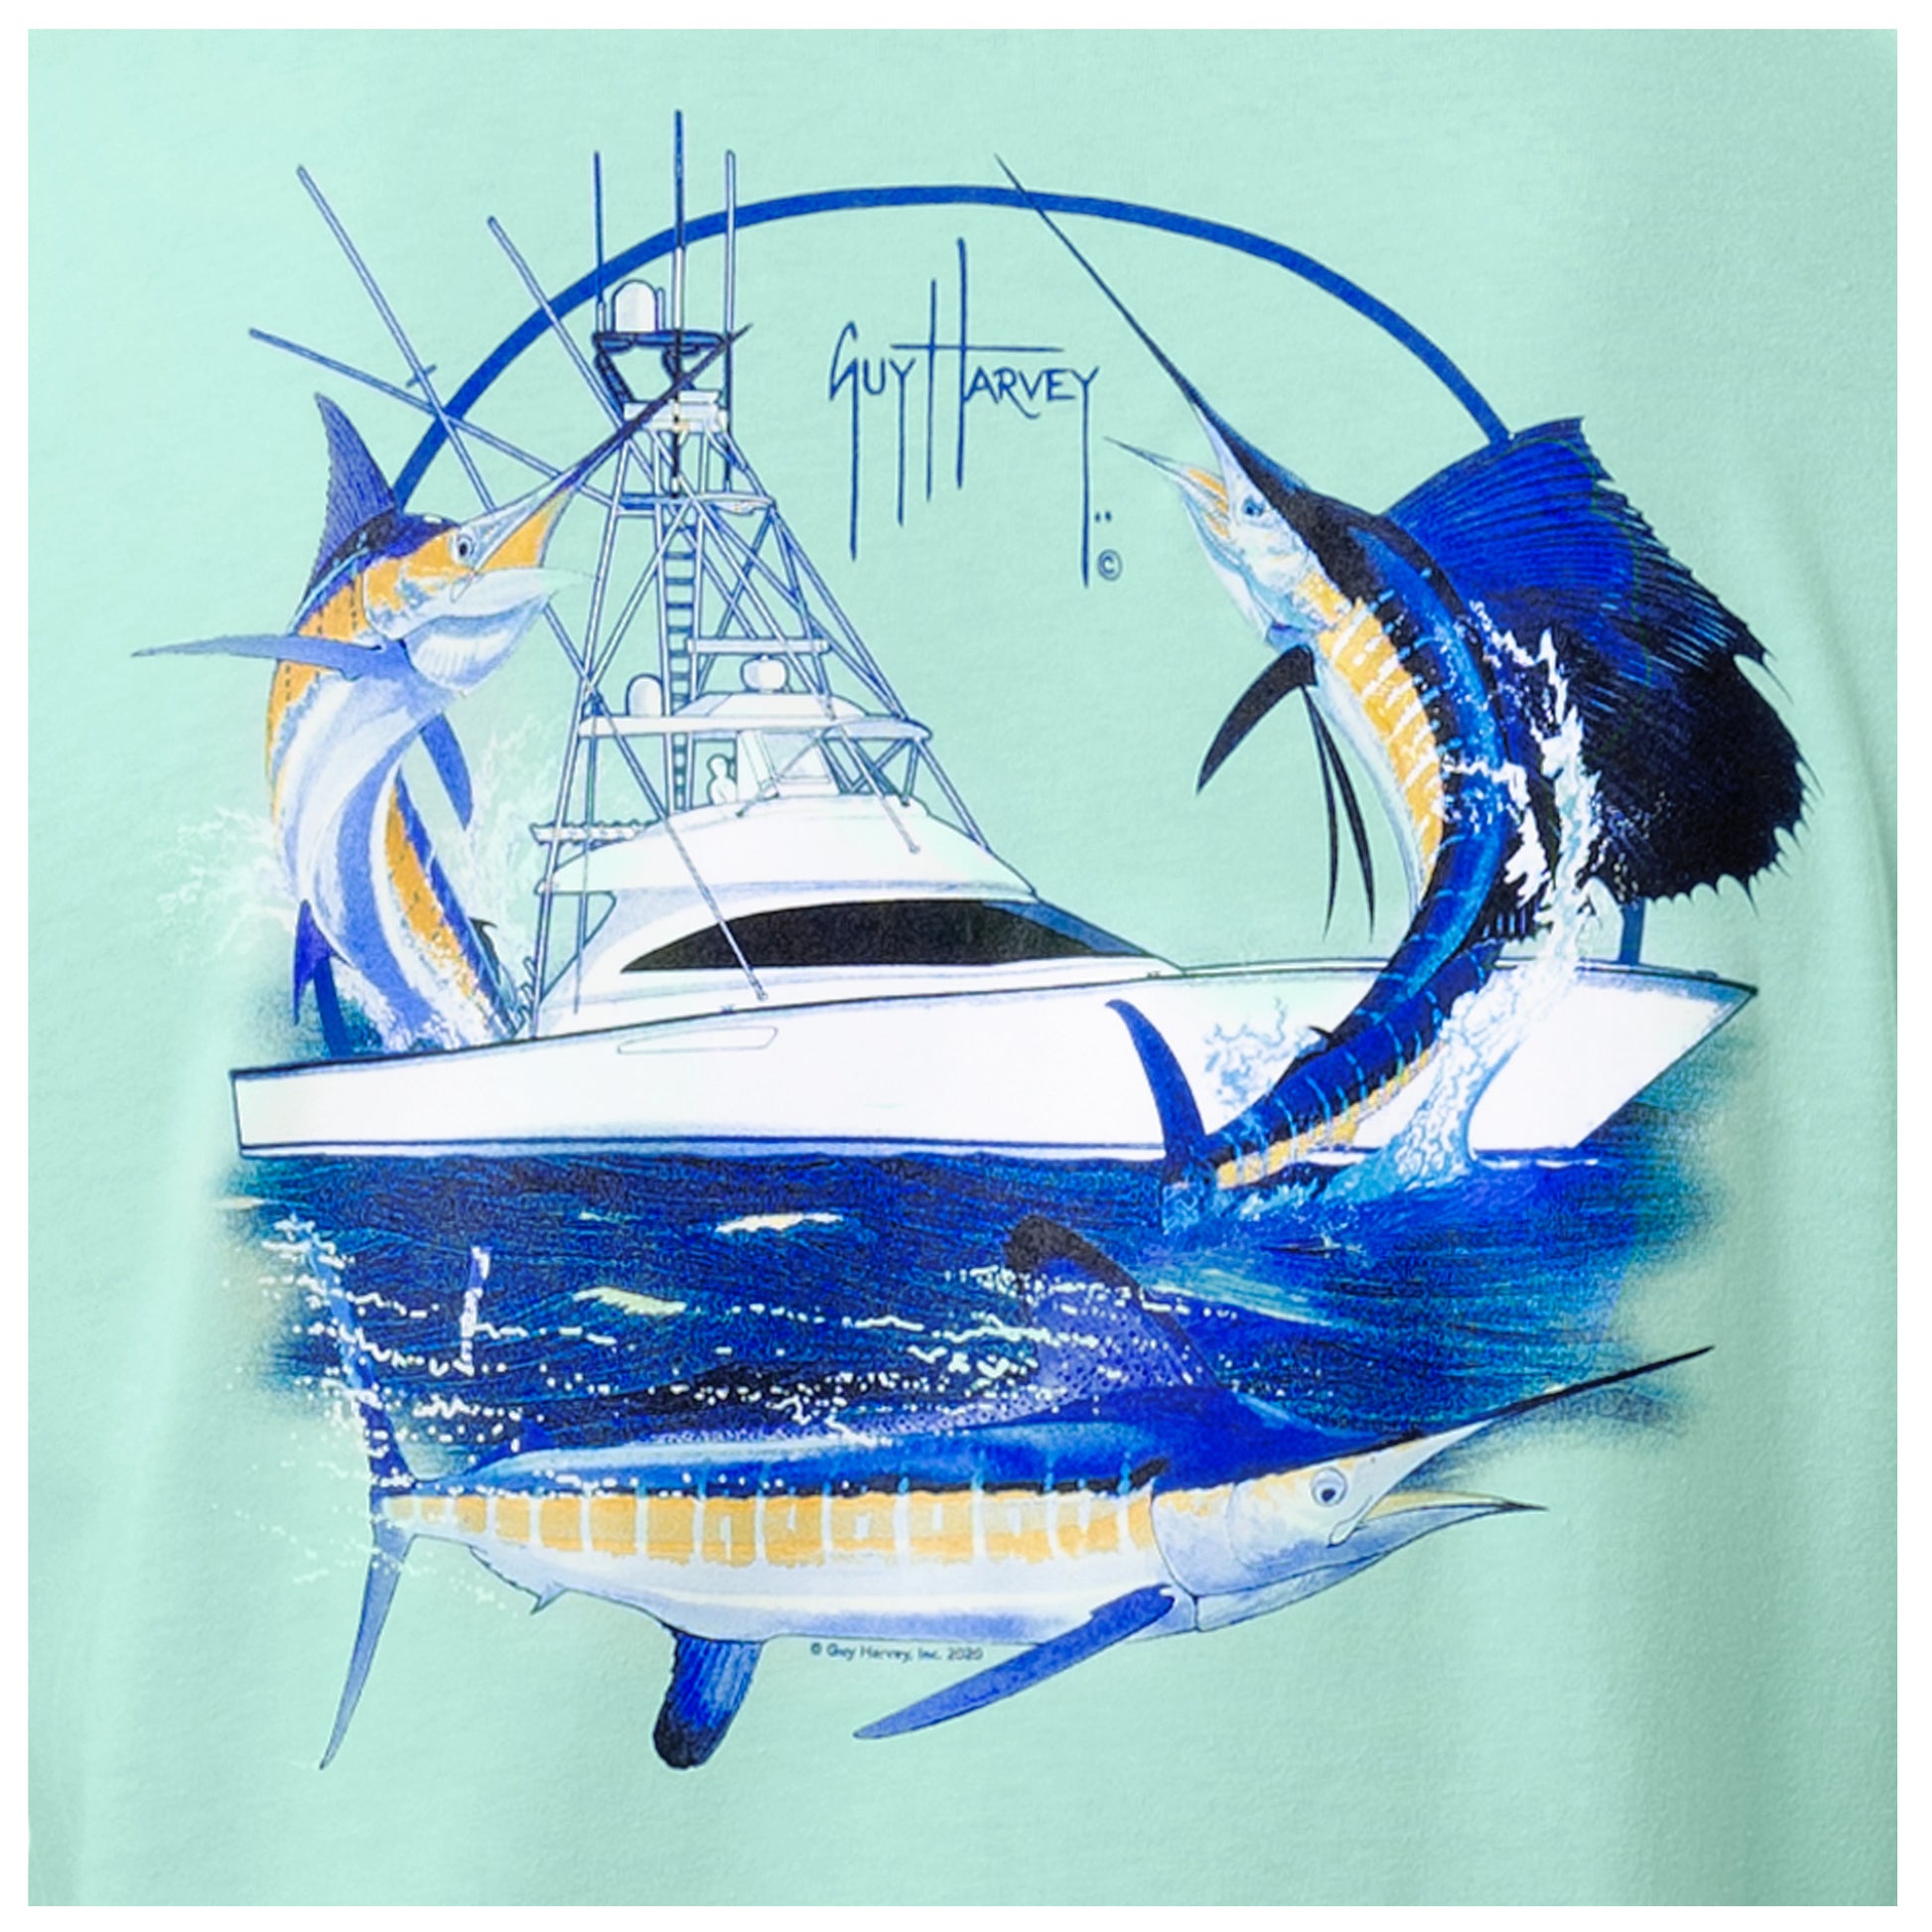 GUY HARVEY Fish Marlin Sport Fishing Aqua Shirt Men's T-Shirt Size L Cotton